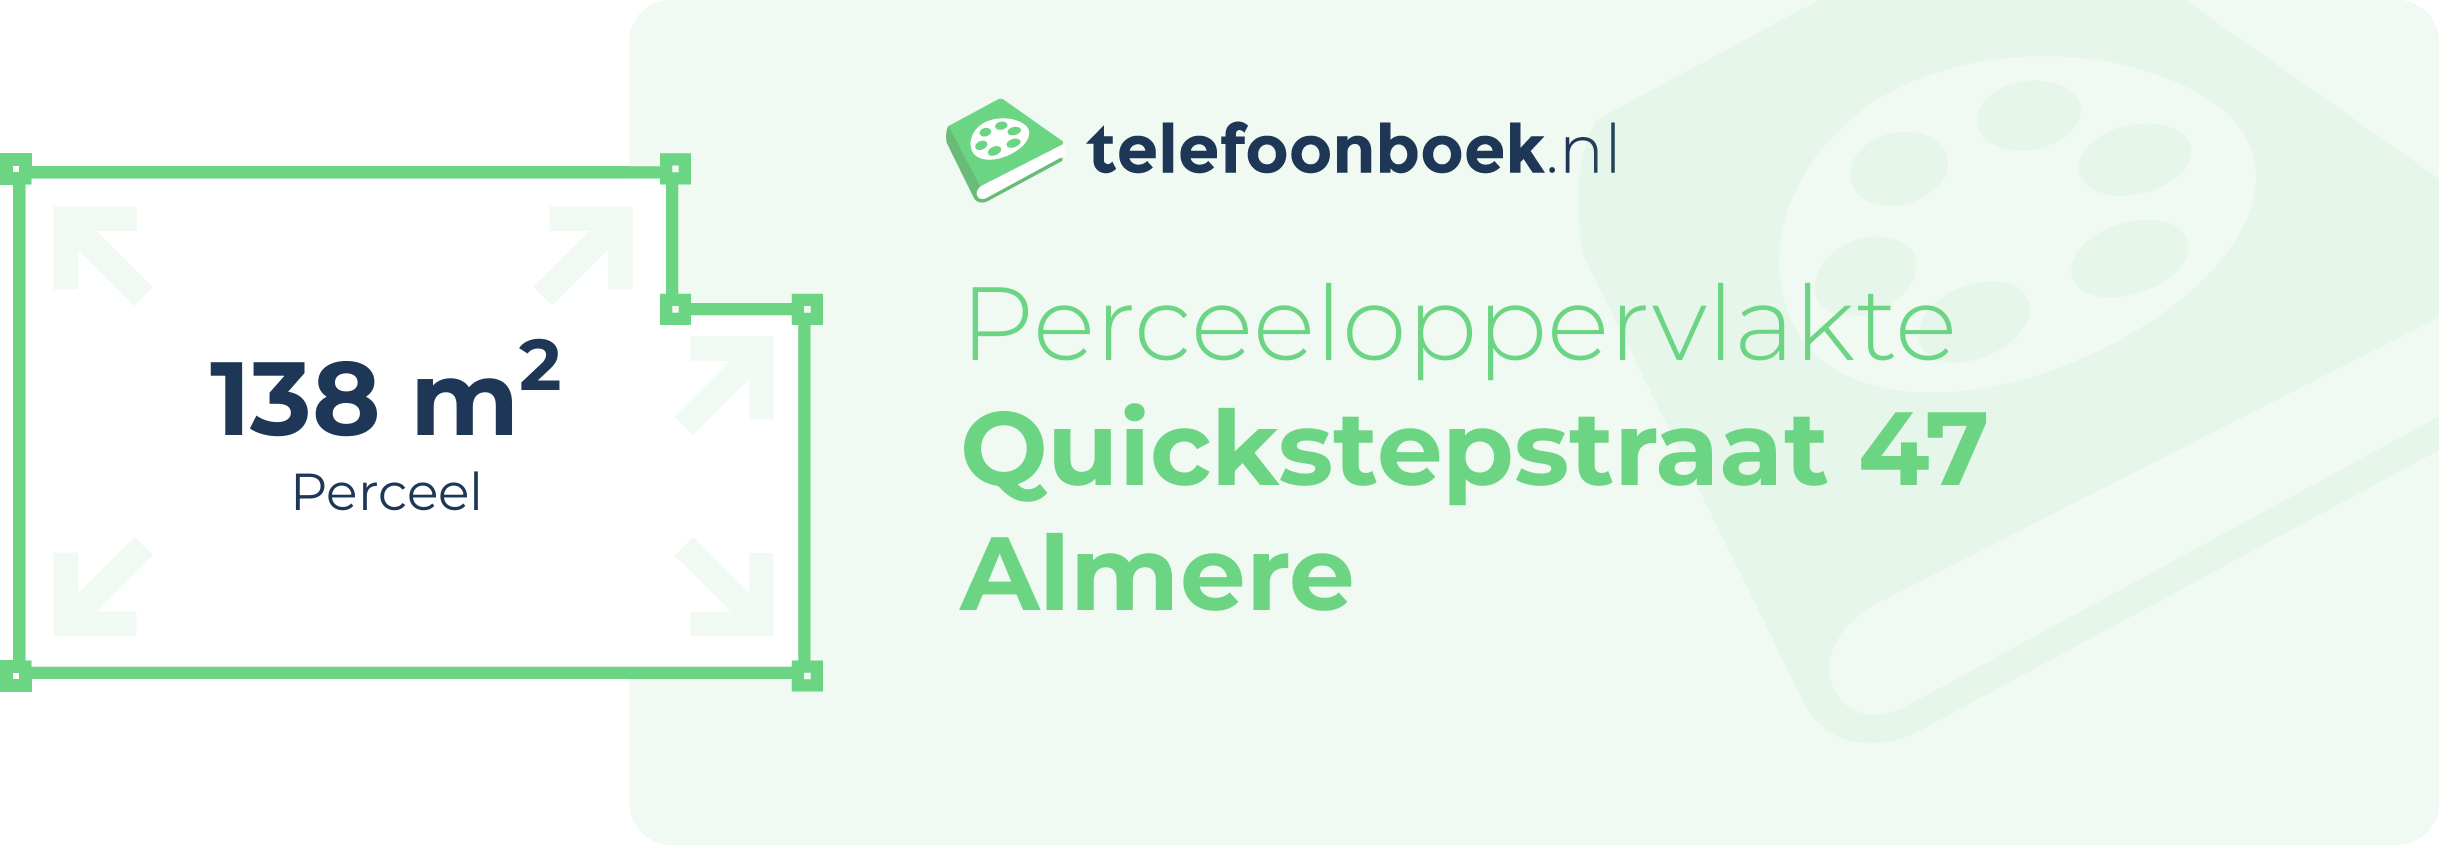 Perceeloppervlakte Quickstepstraat 47 Almere